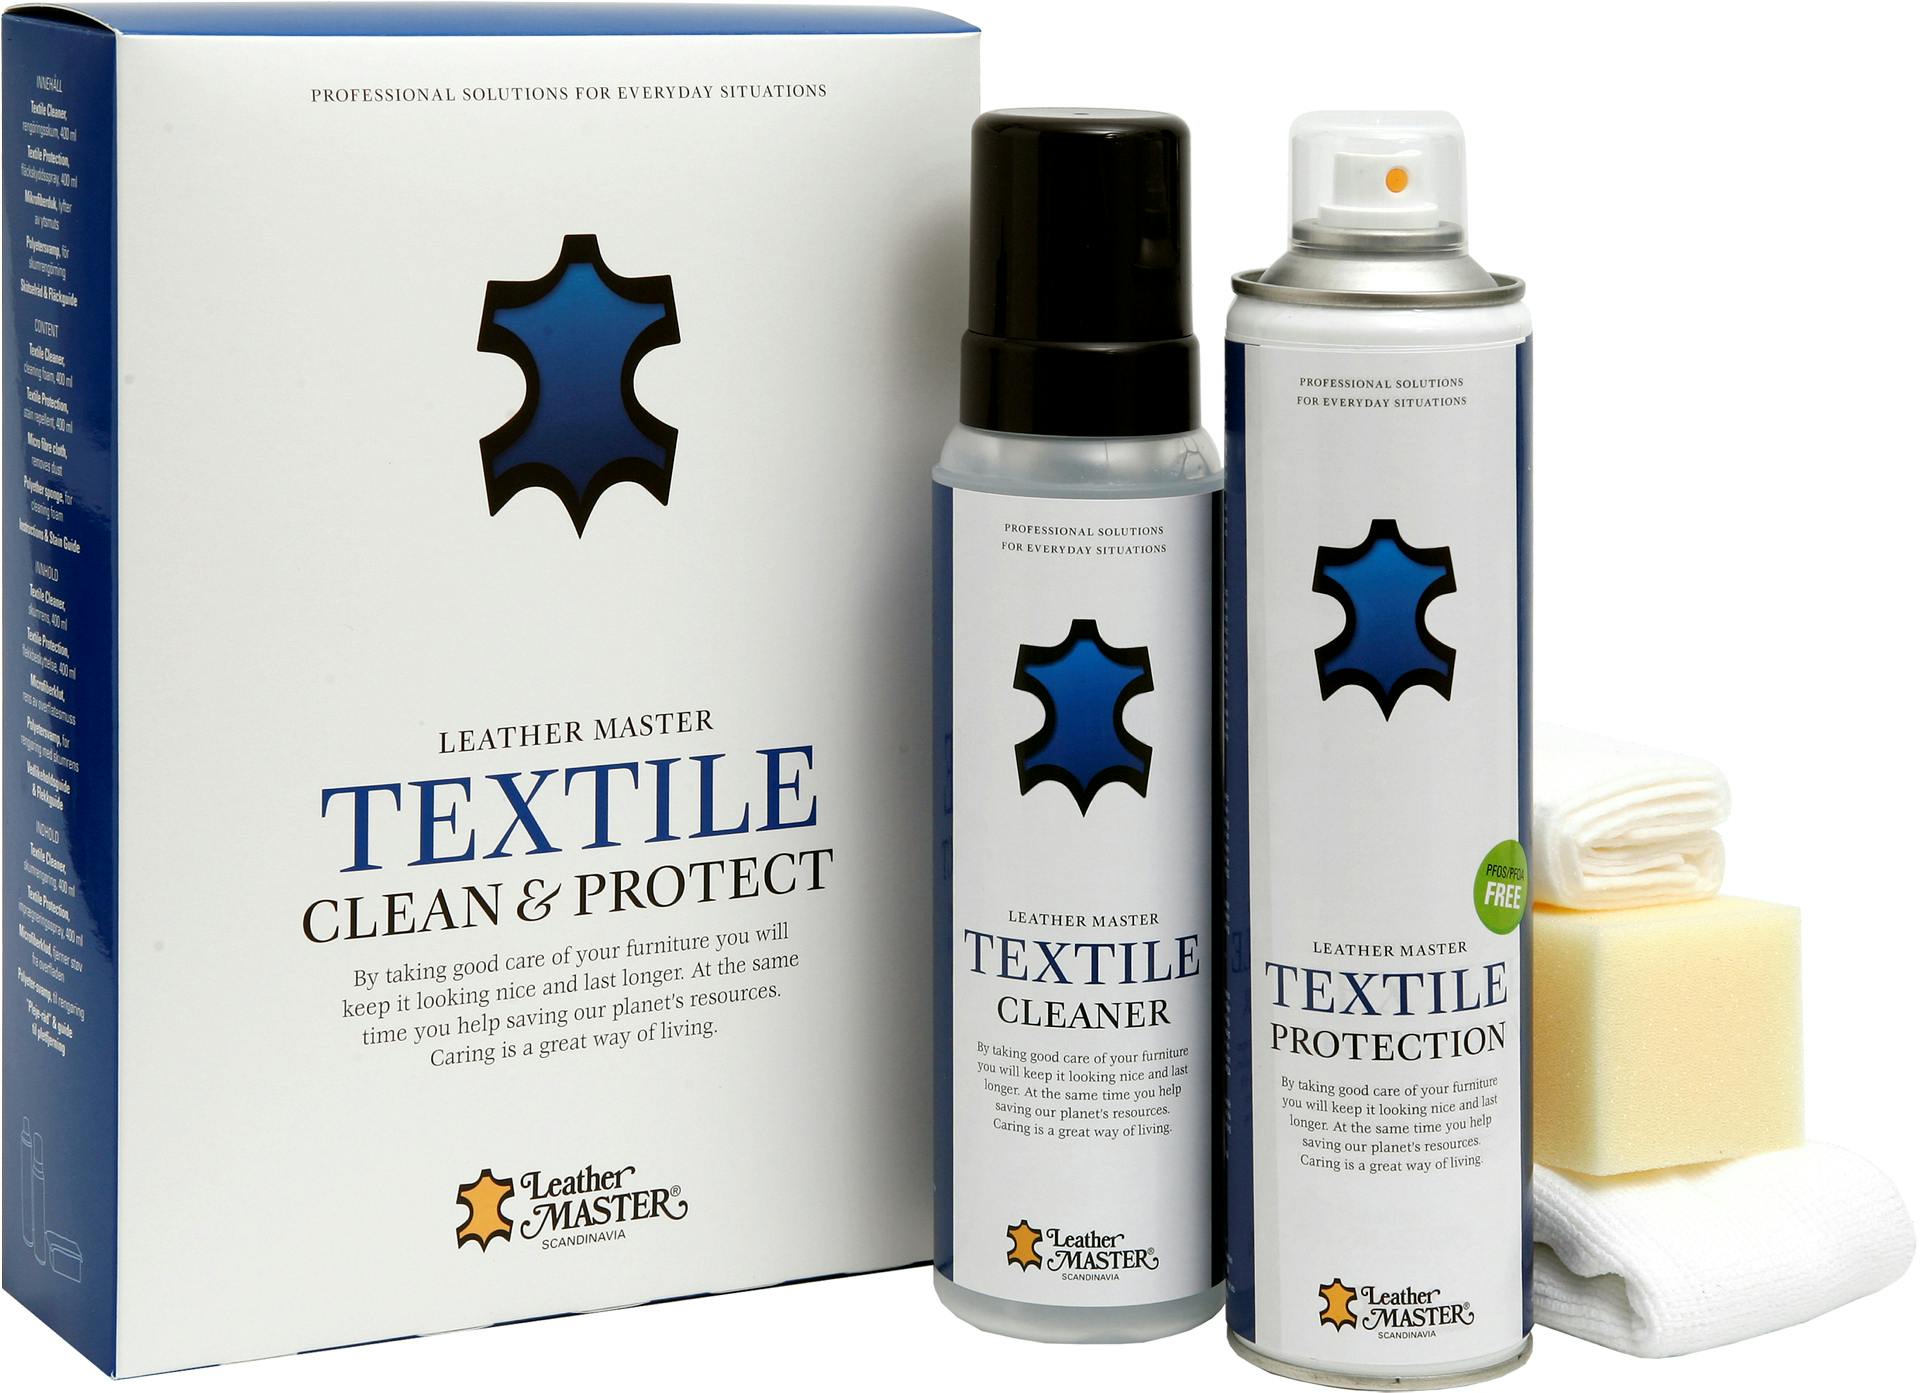 Textile Clean & Protect kit